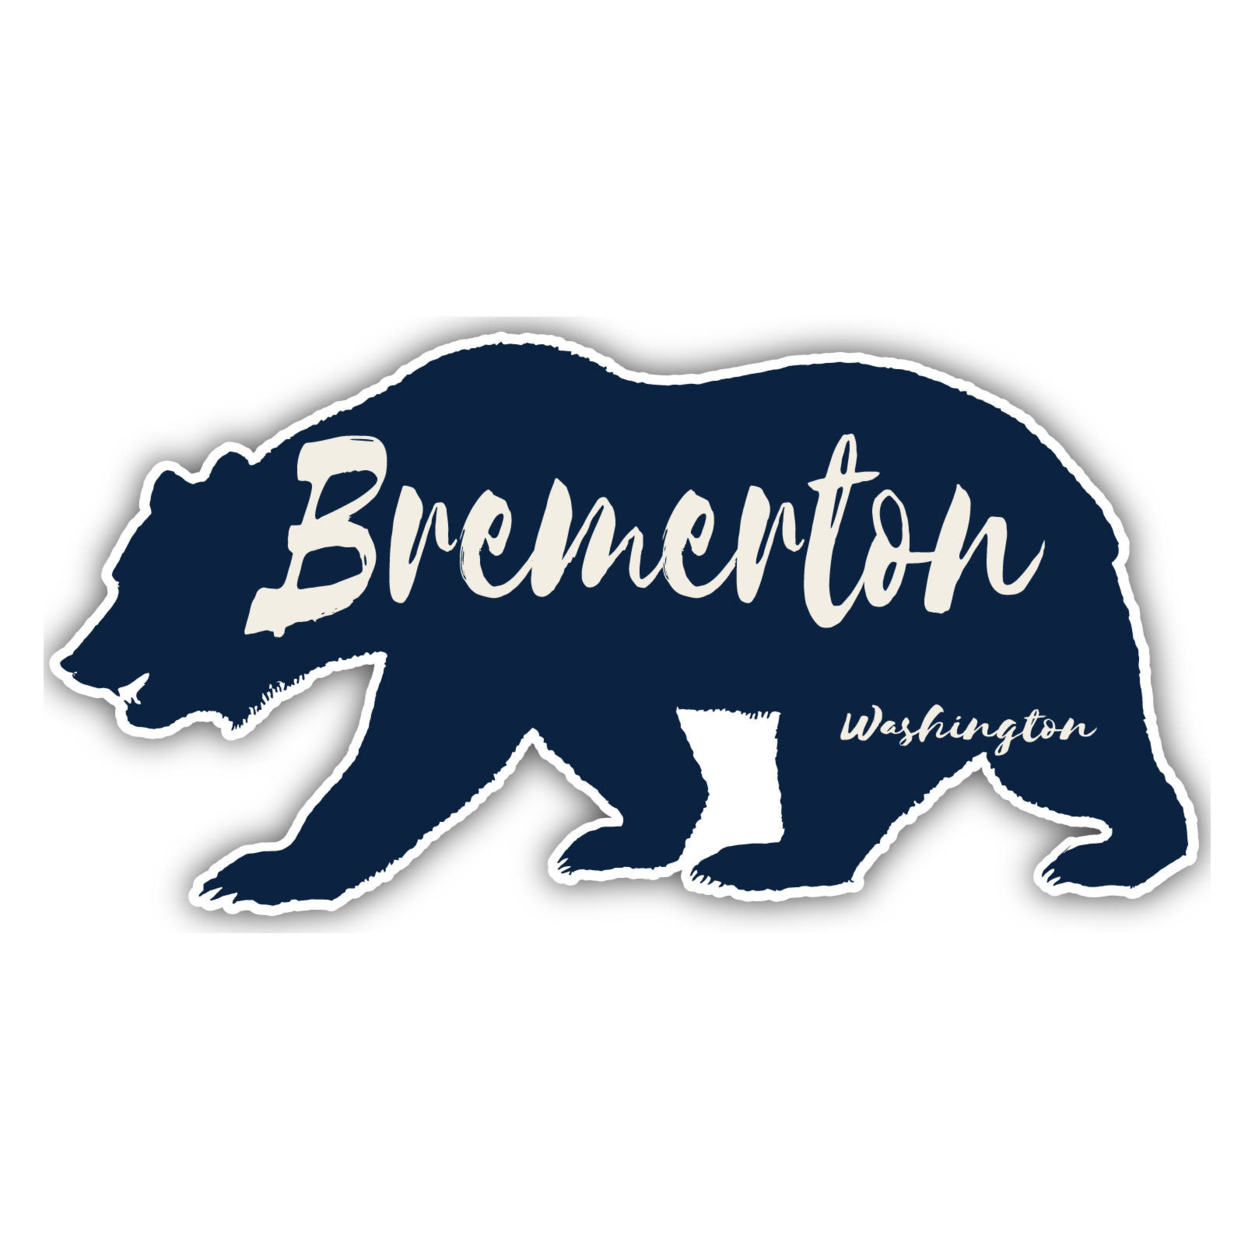 Bremerton Washington Souvenir Decorative Stickers (Choose Theme And Size) - 4-Pack, 12-Inch, Tent